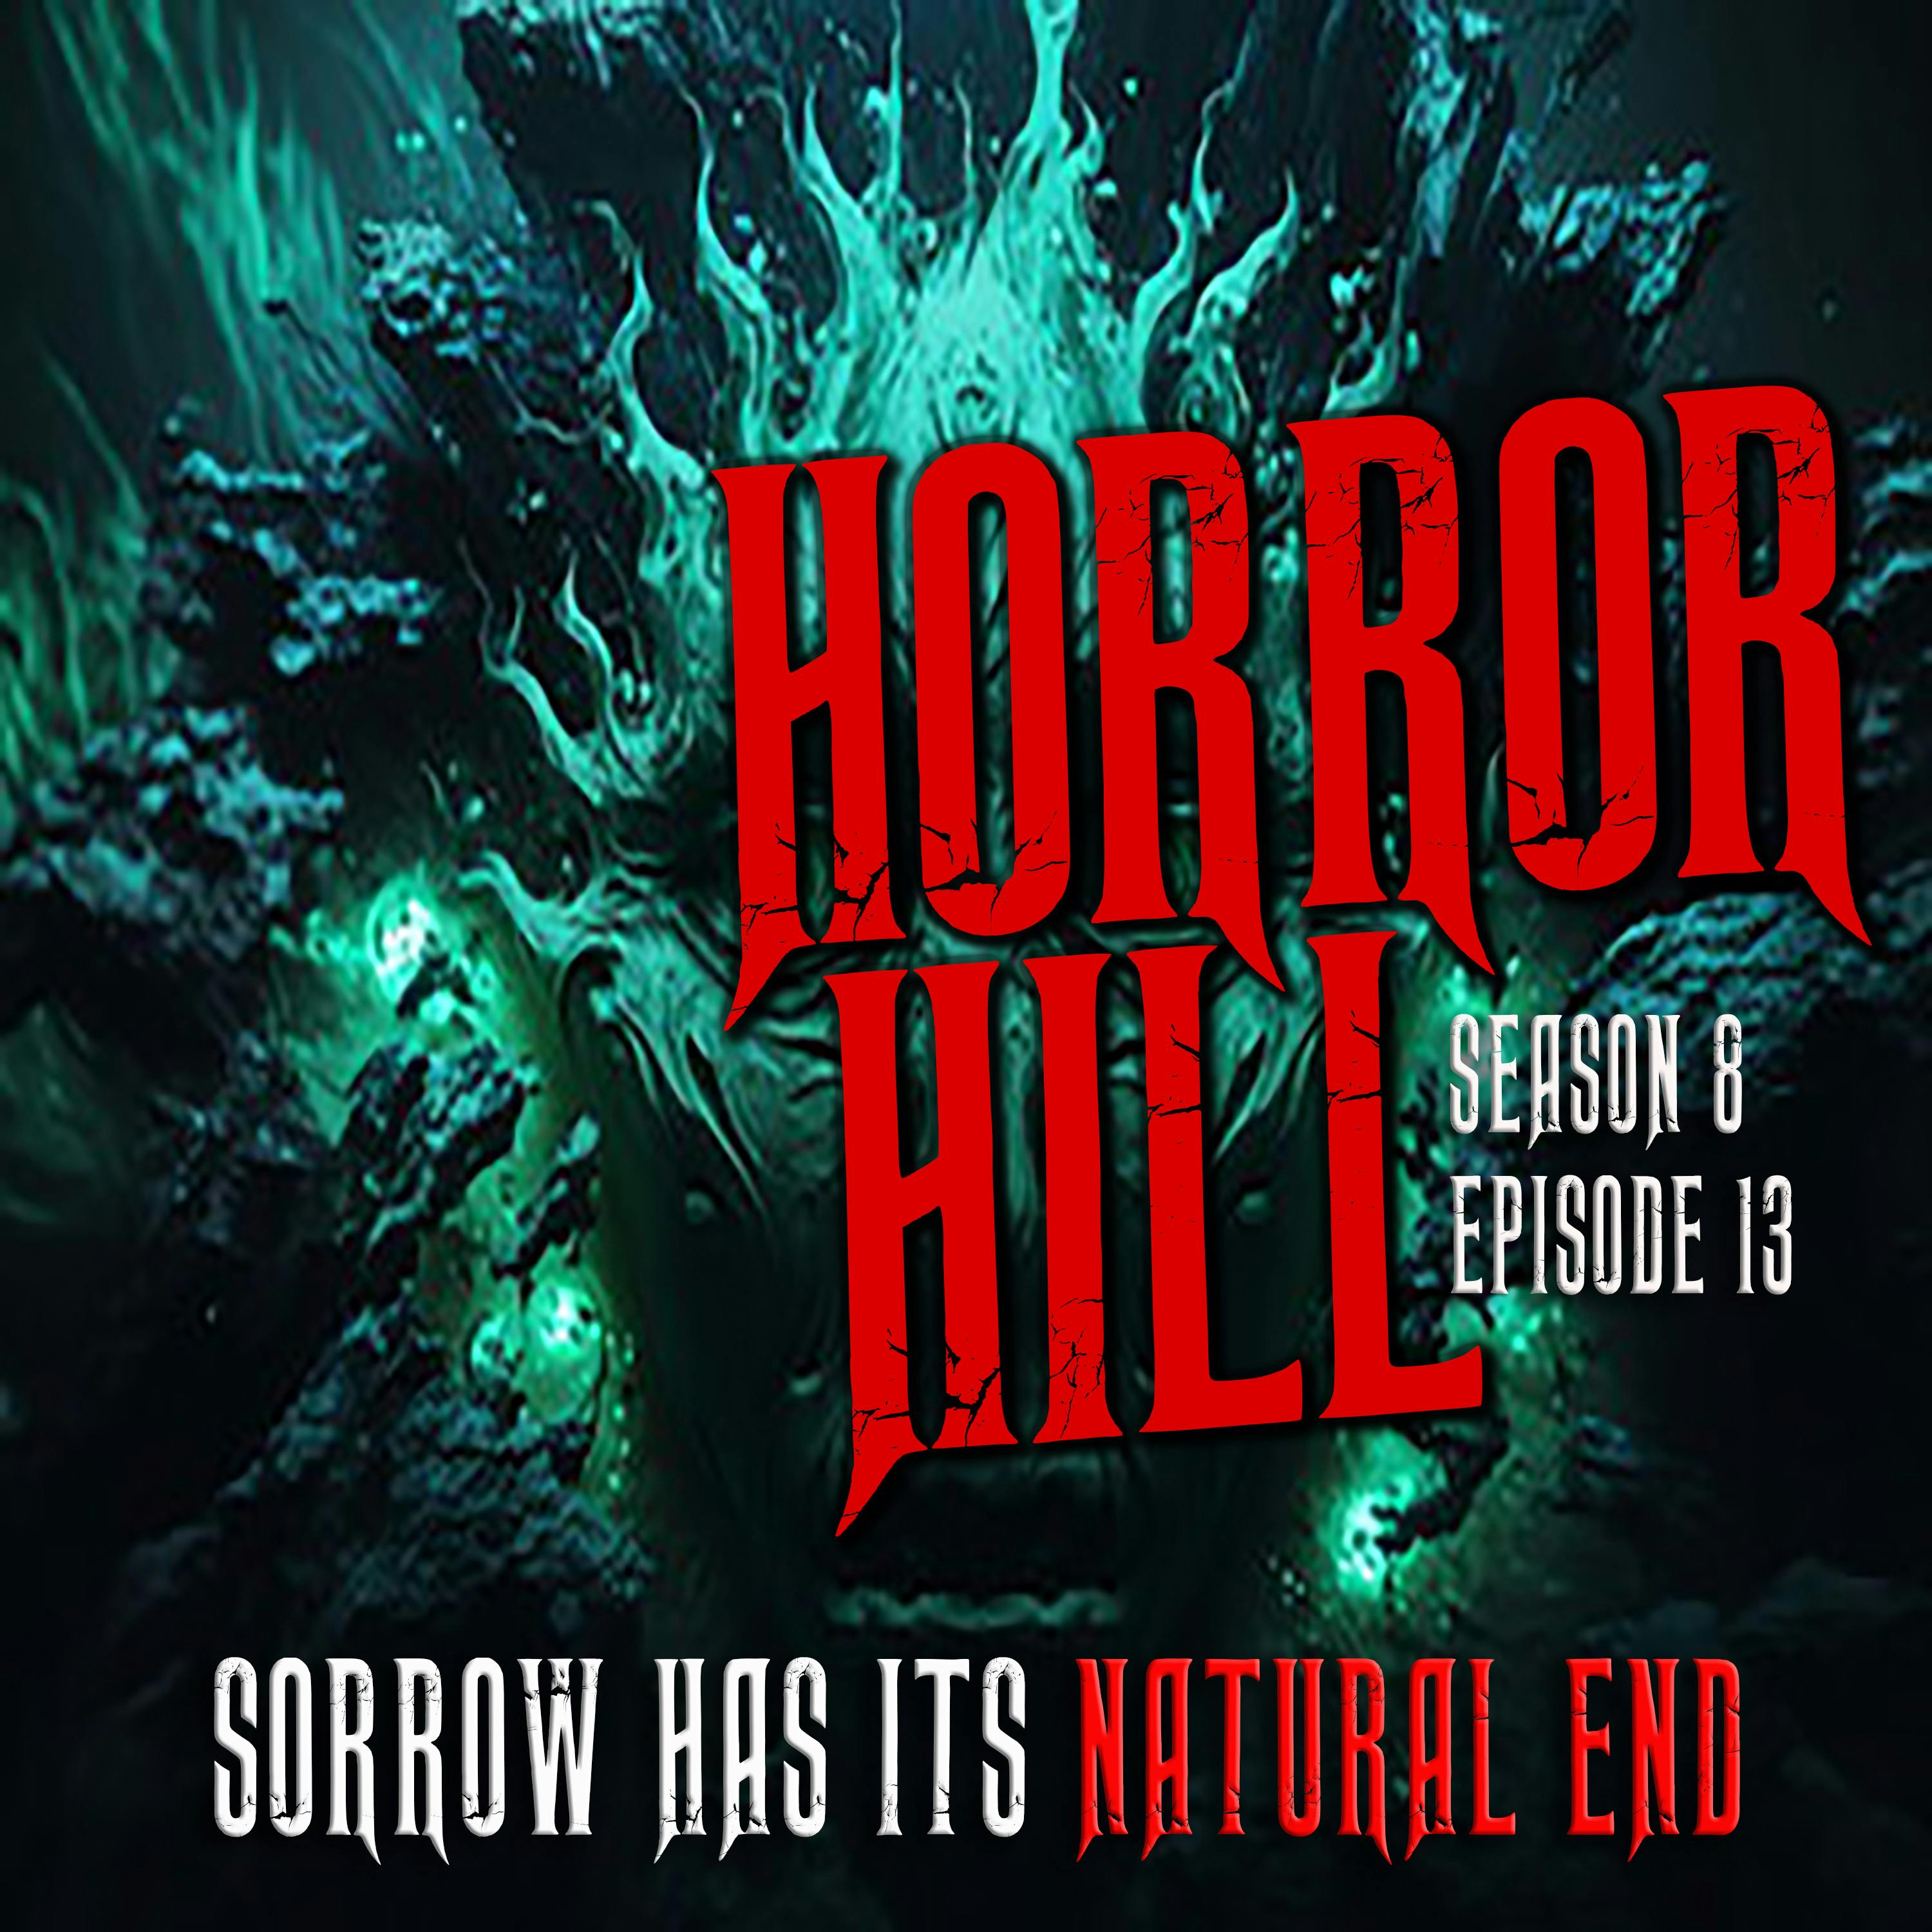 S8E13 - "Sorrow Has Its Natural End" - Horror Hill